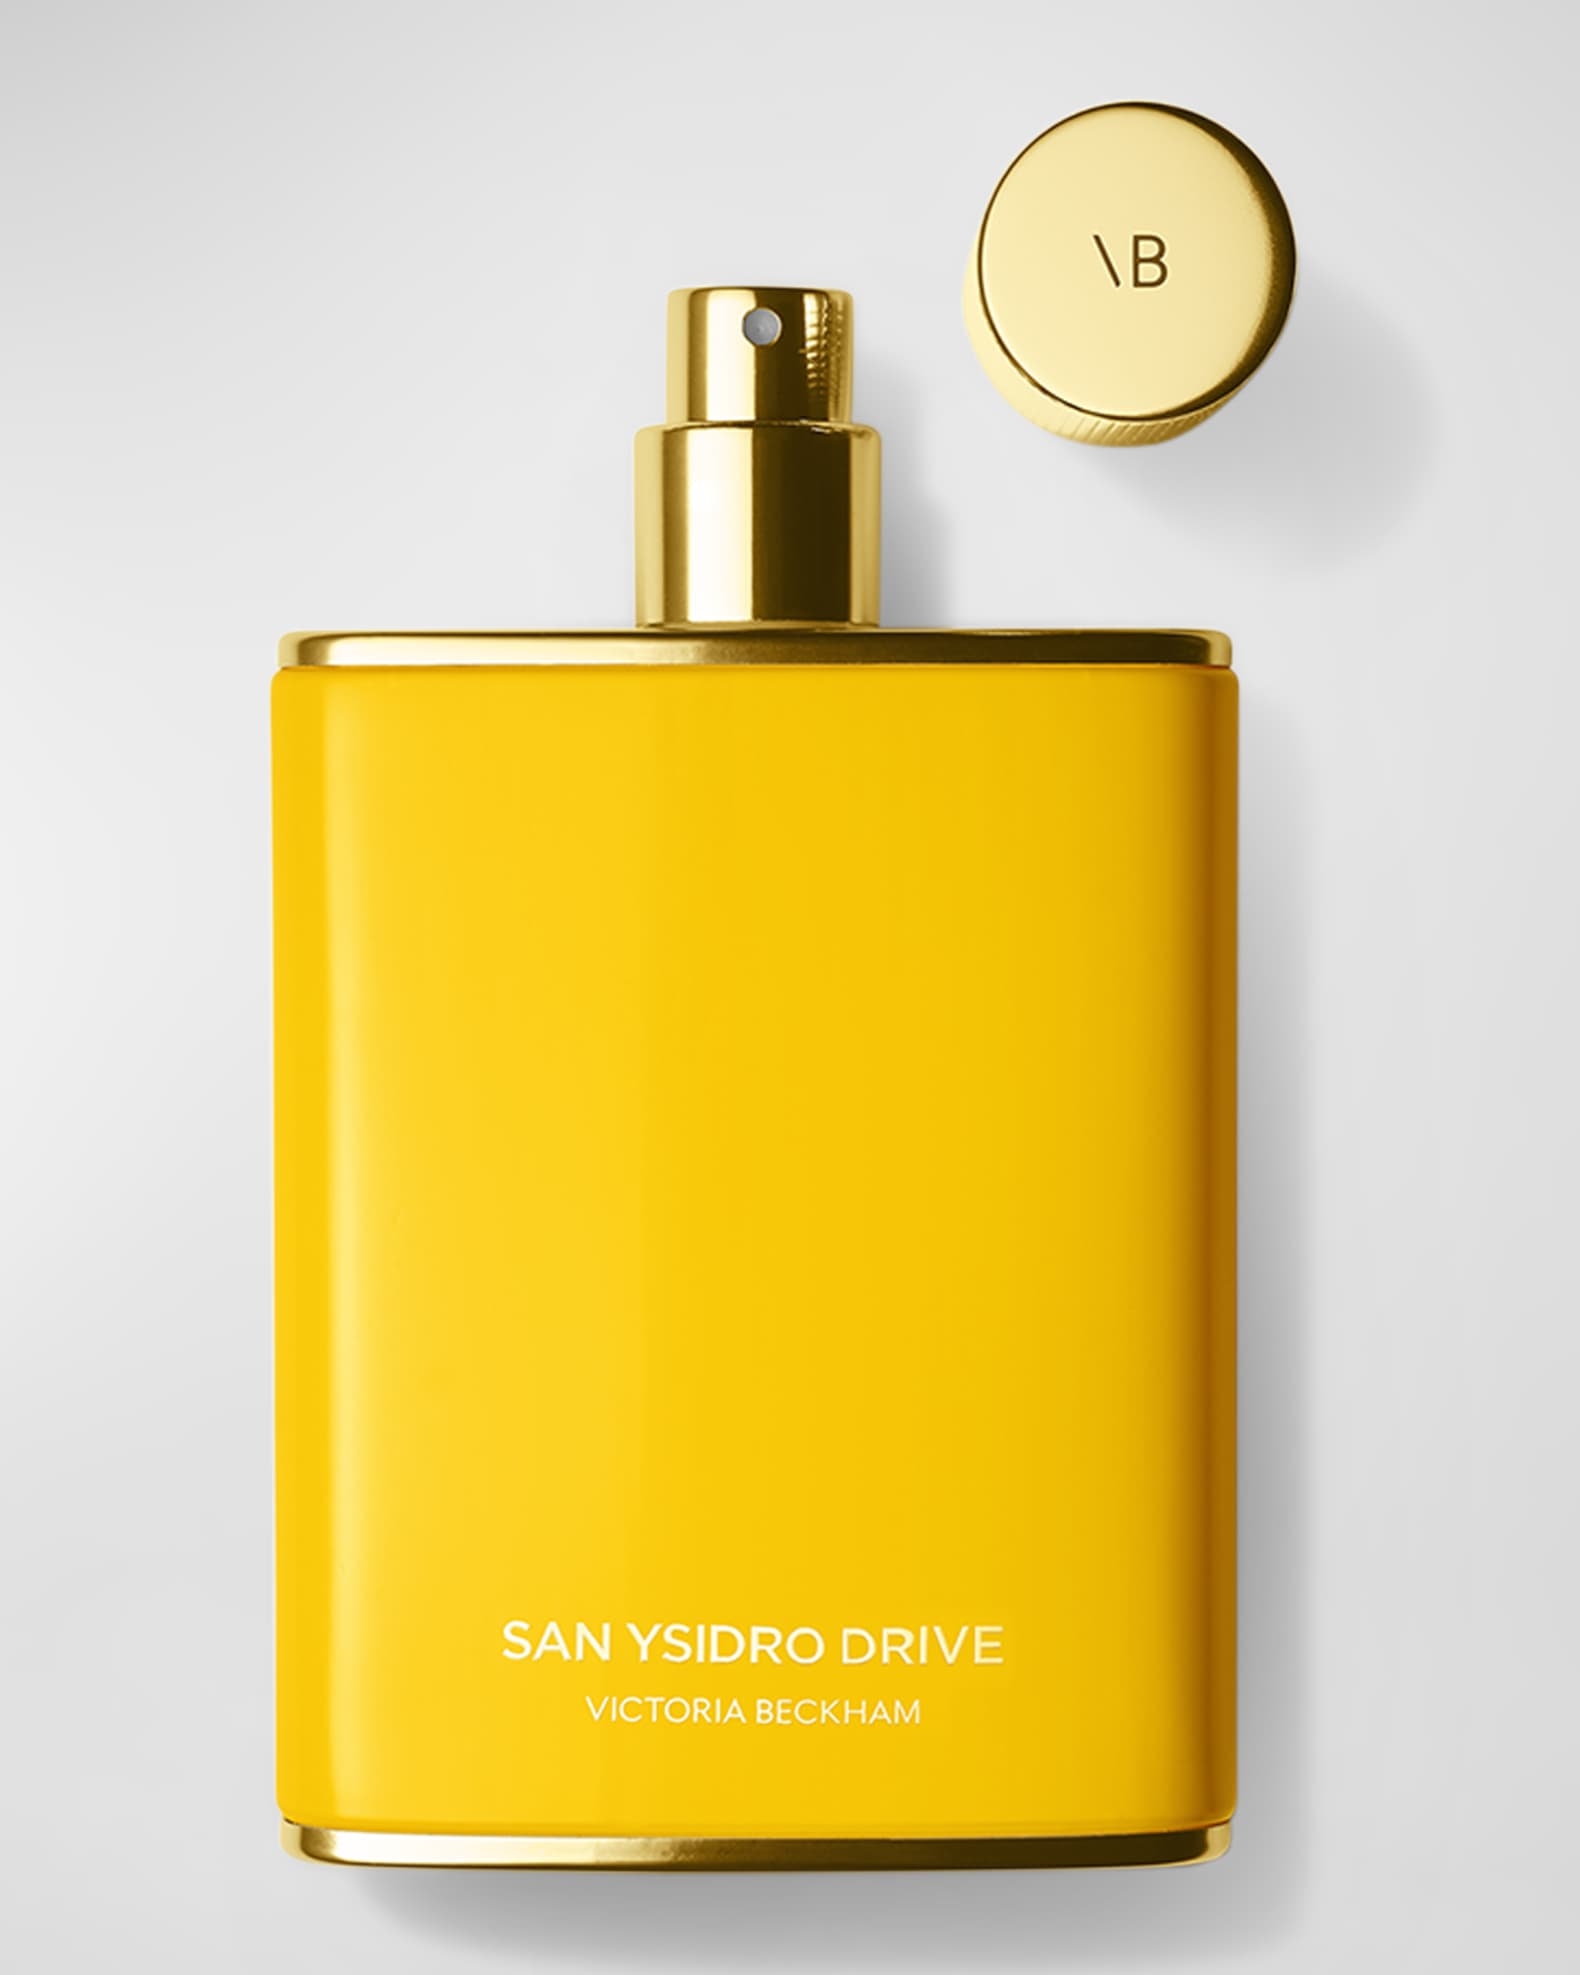 Victoria Beckham San Ysidro Drive Eau de Parfum, 1.69 oz.